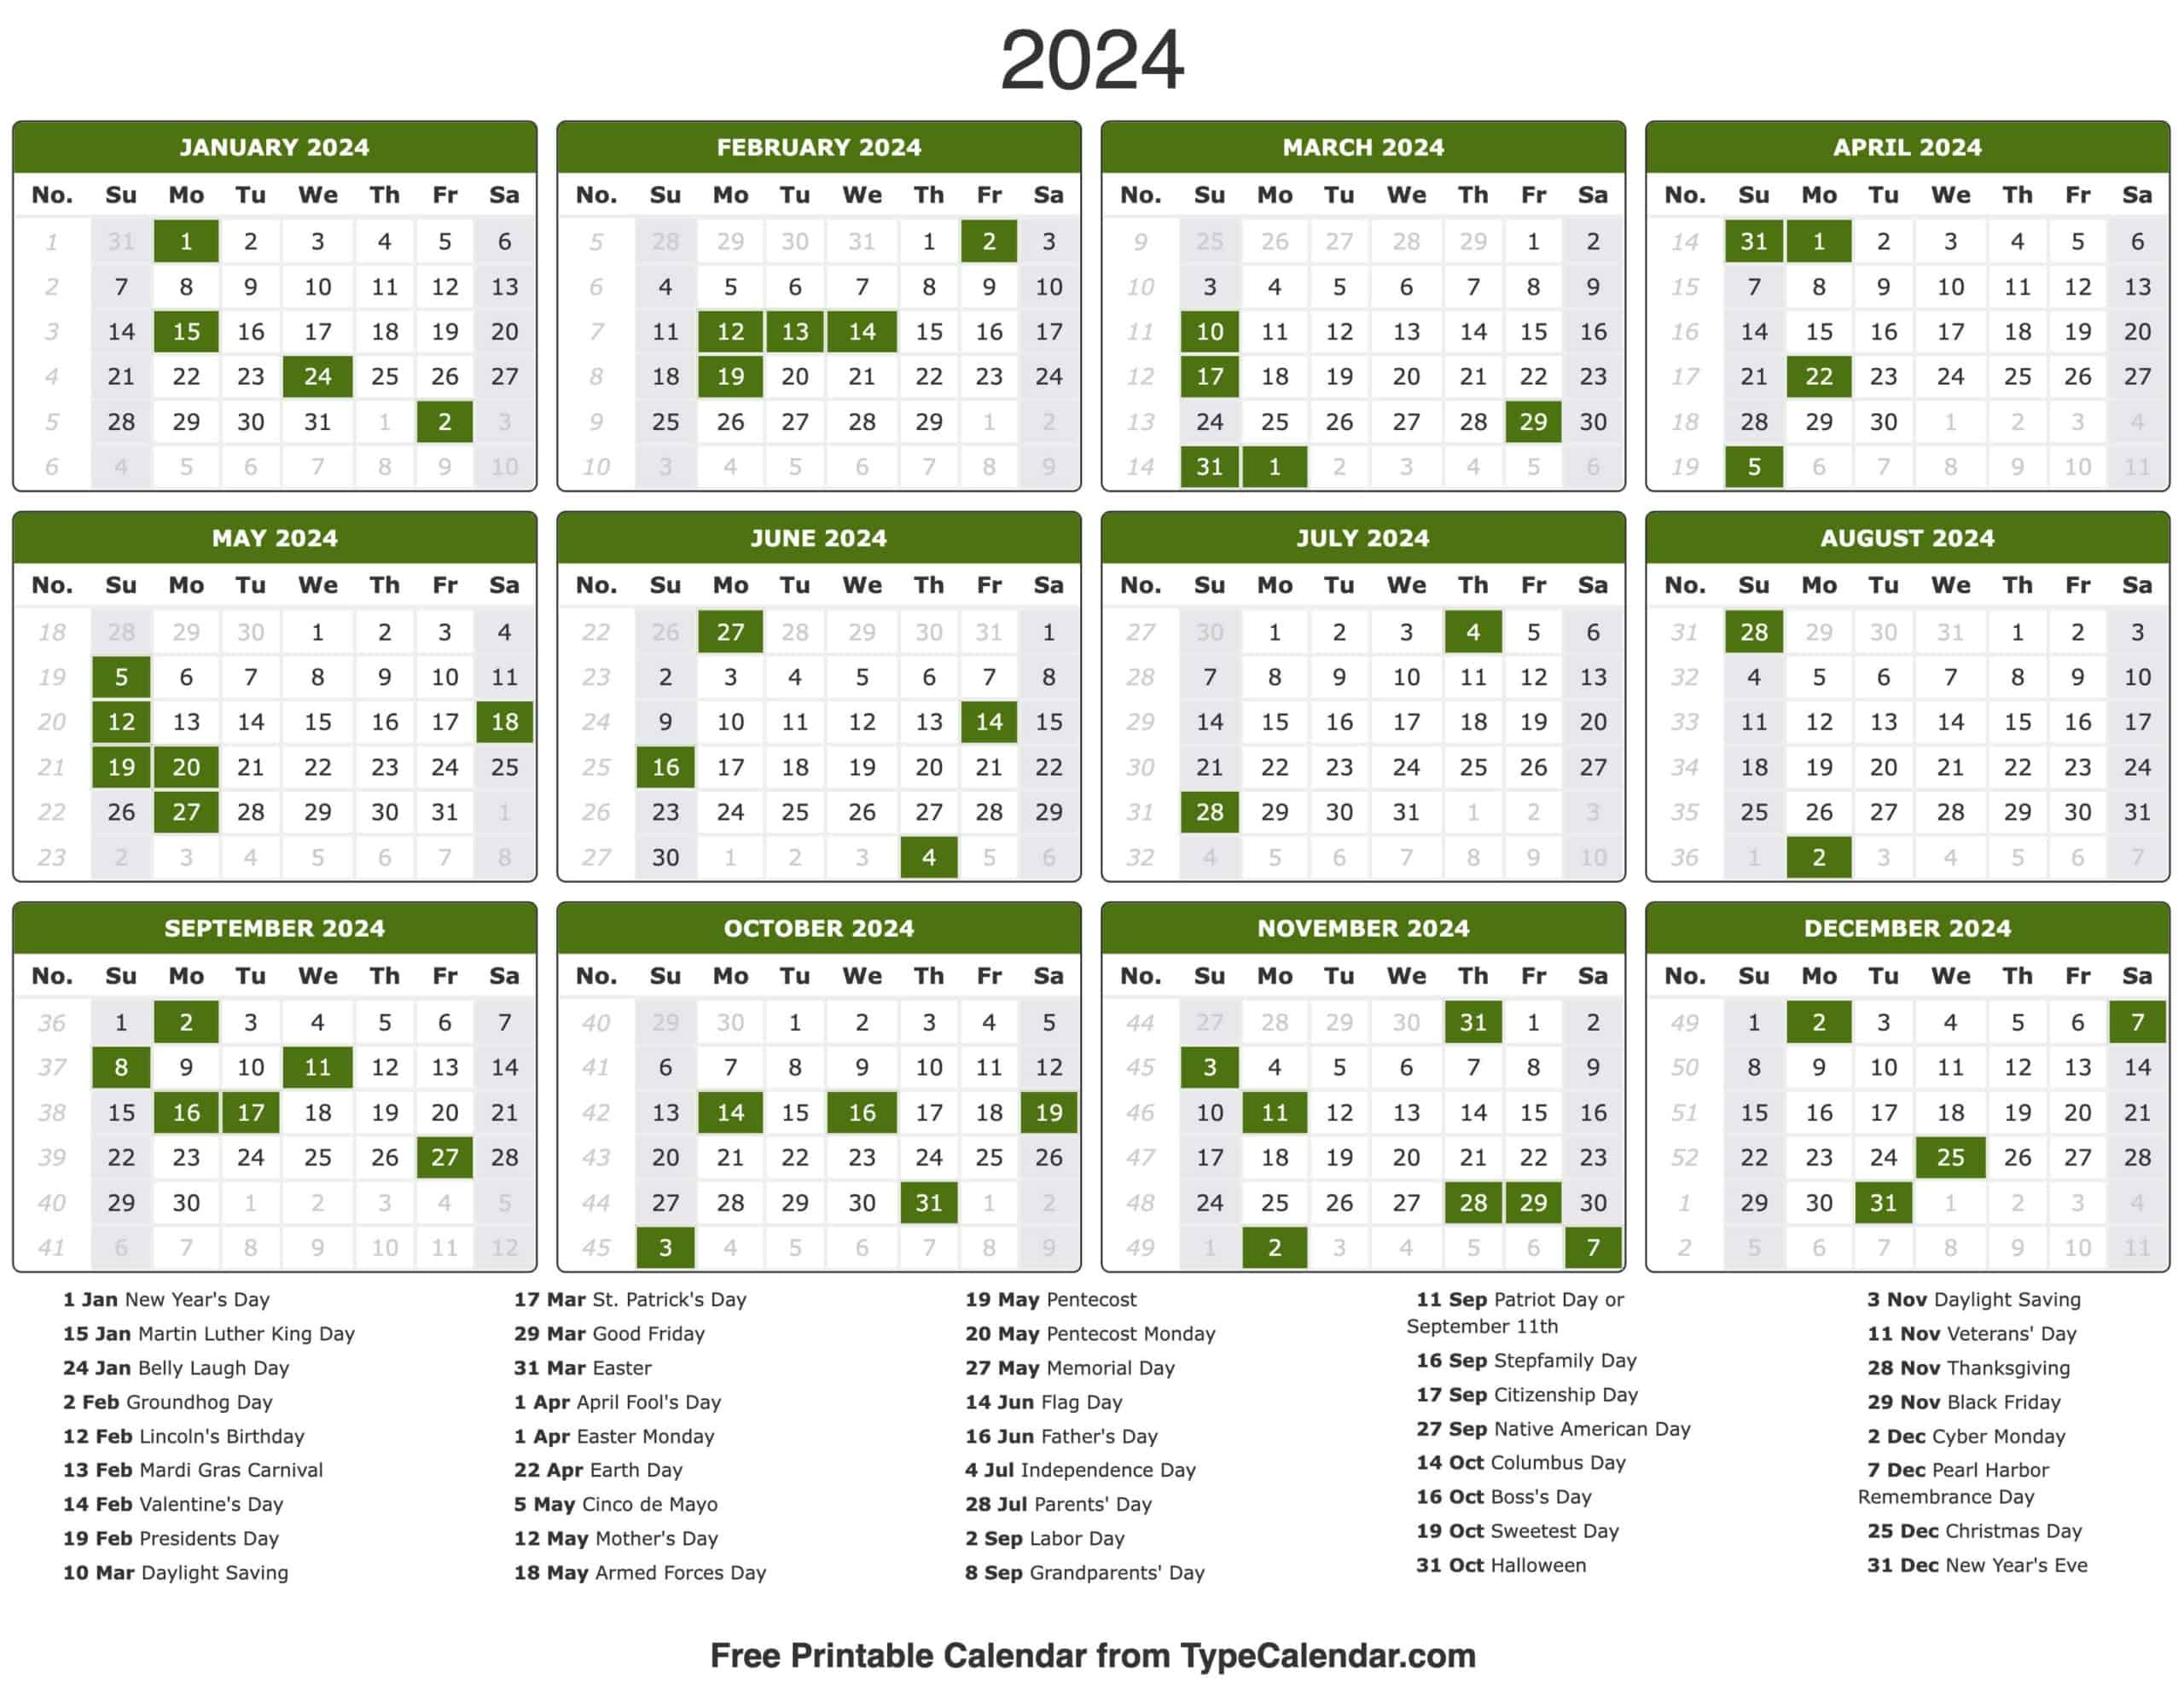 2024 Calendar: Free Printable Calendar With Holidays | 2024 Yearly Holiday Calendar